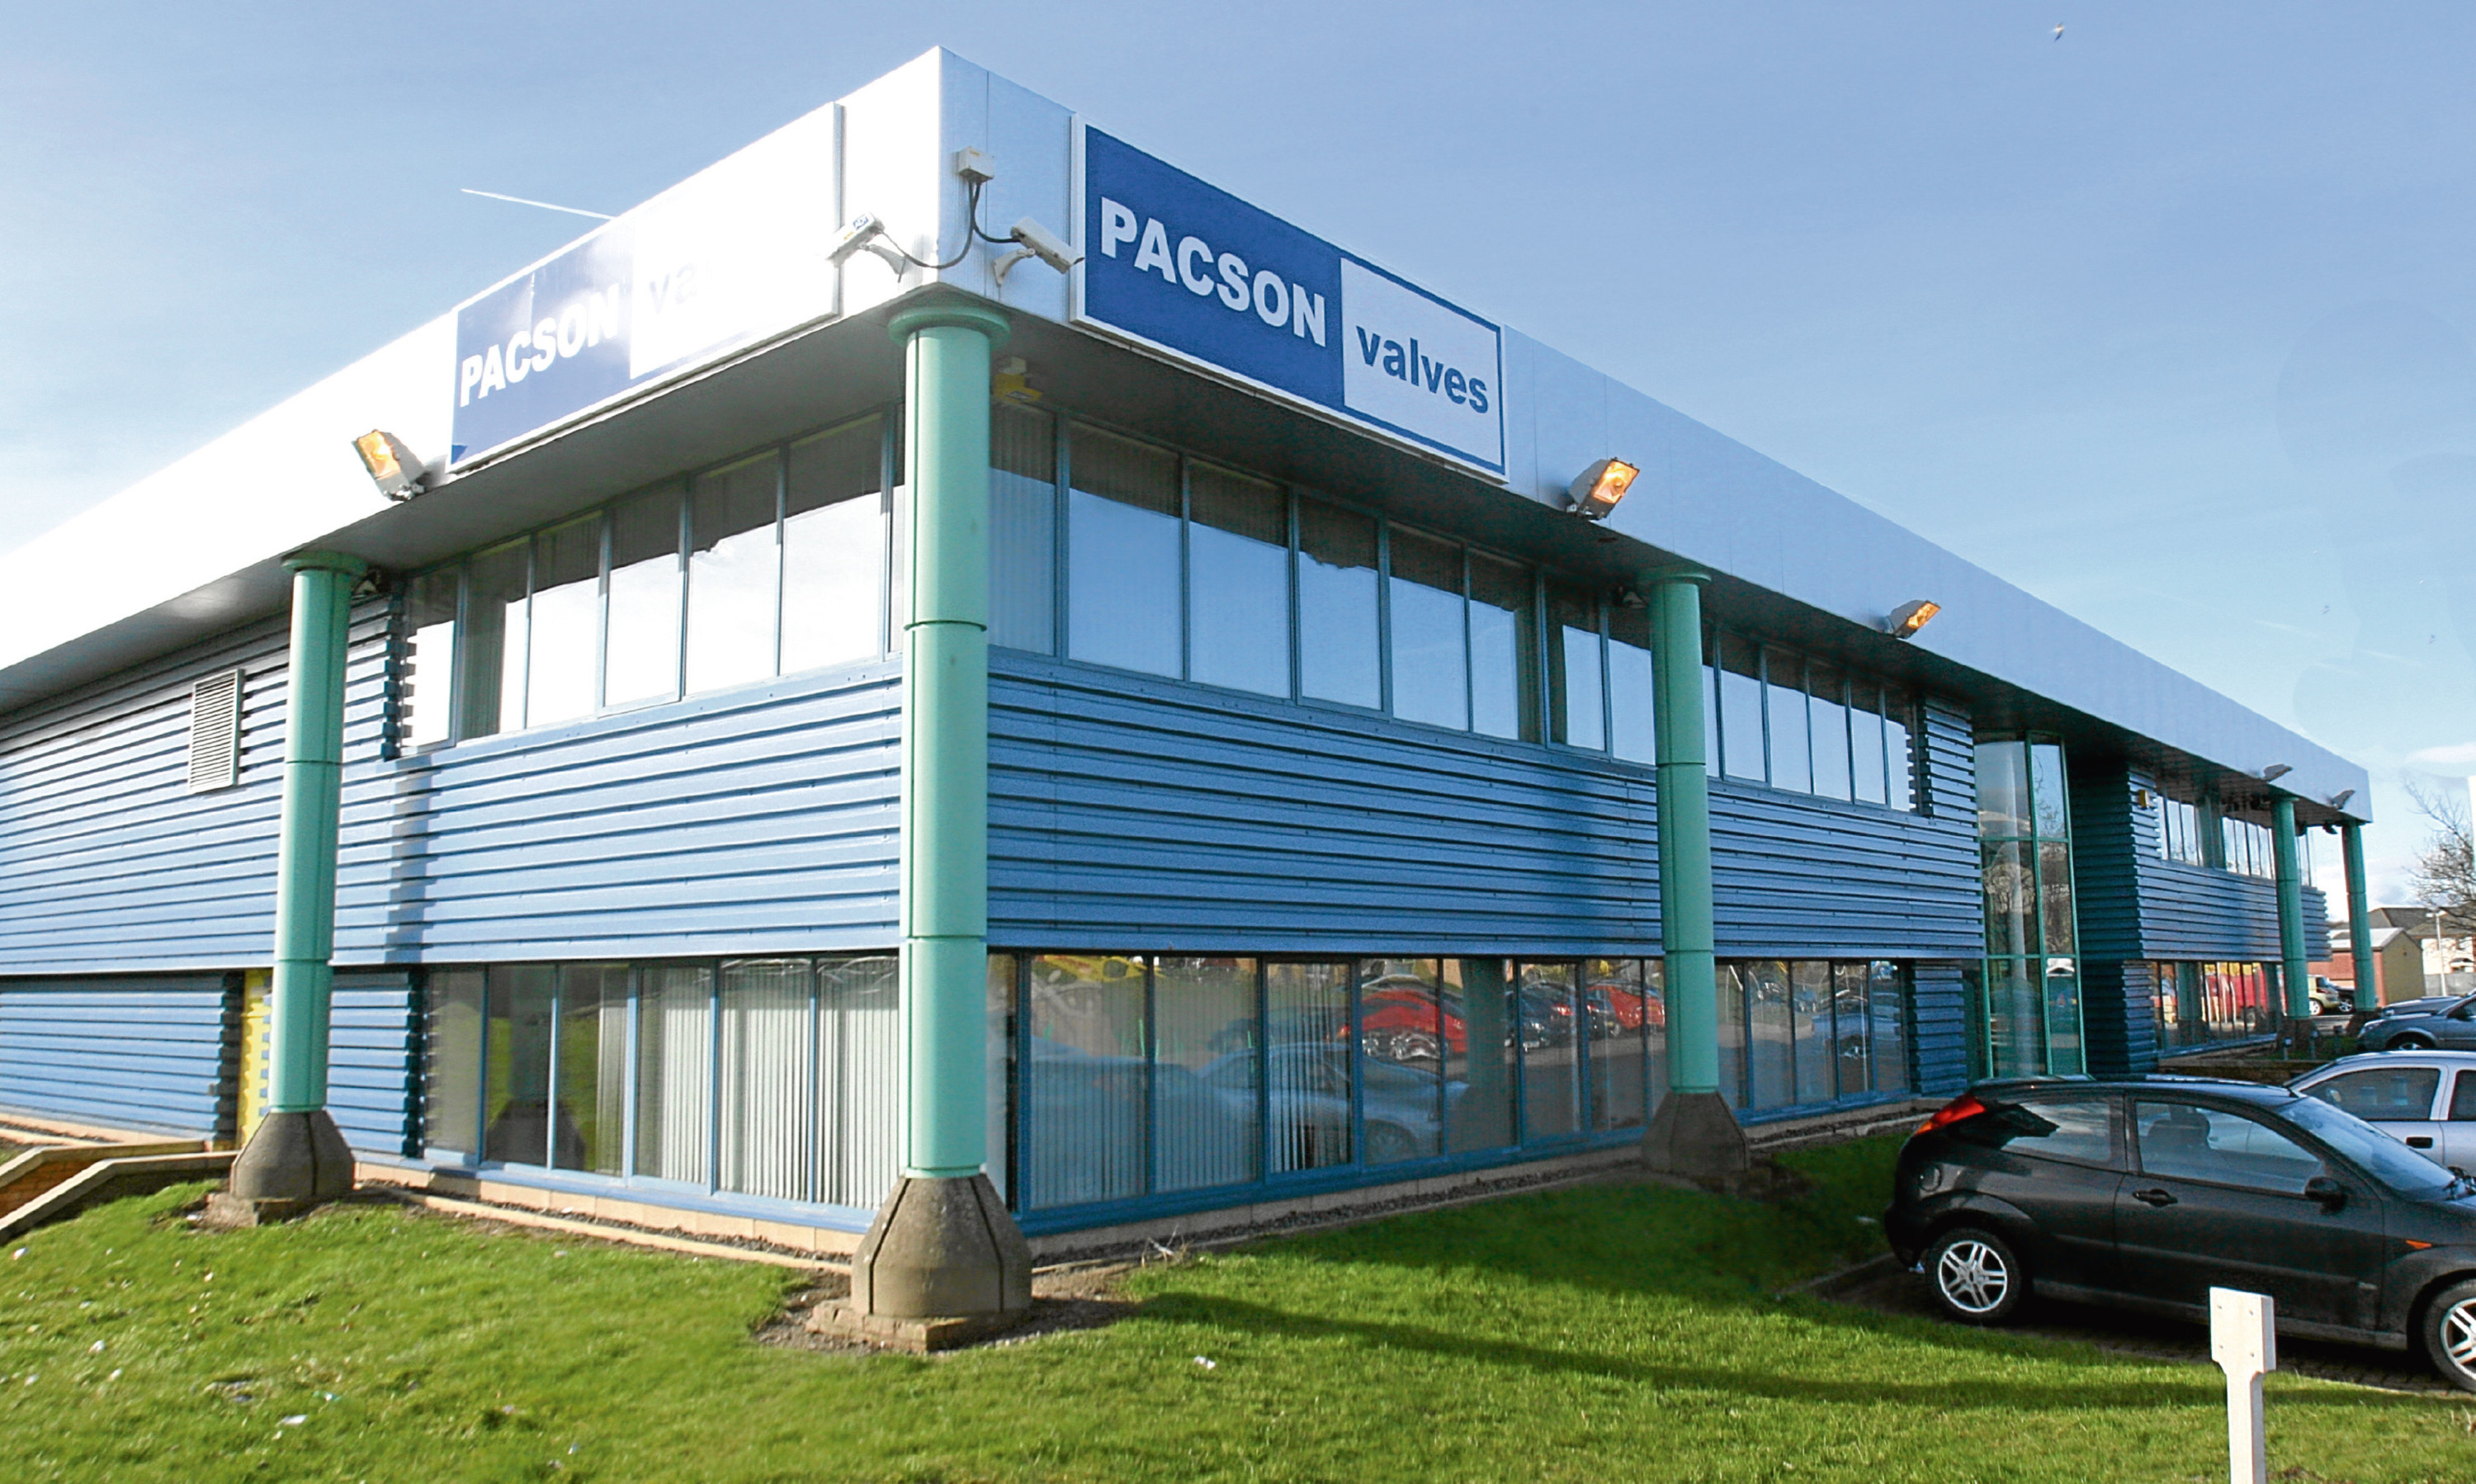 Pacson Valves, Claverhouse Industrial Park, Dundee.